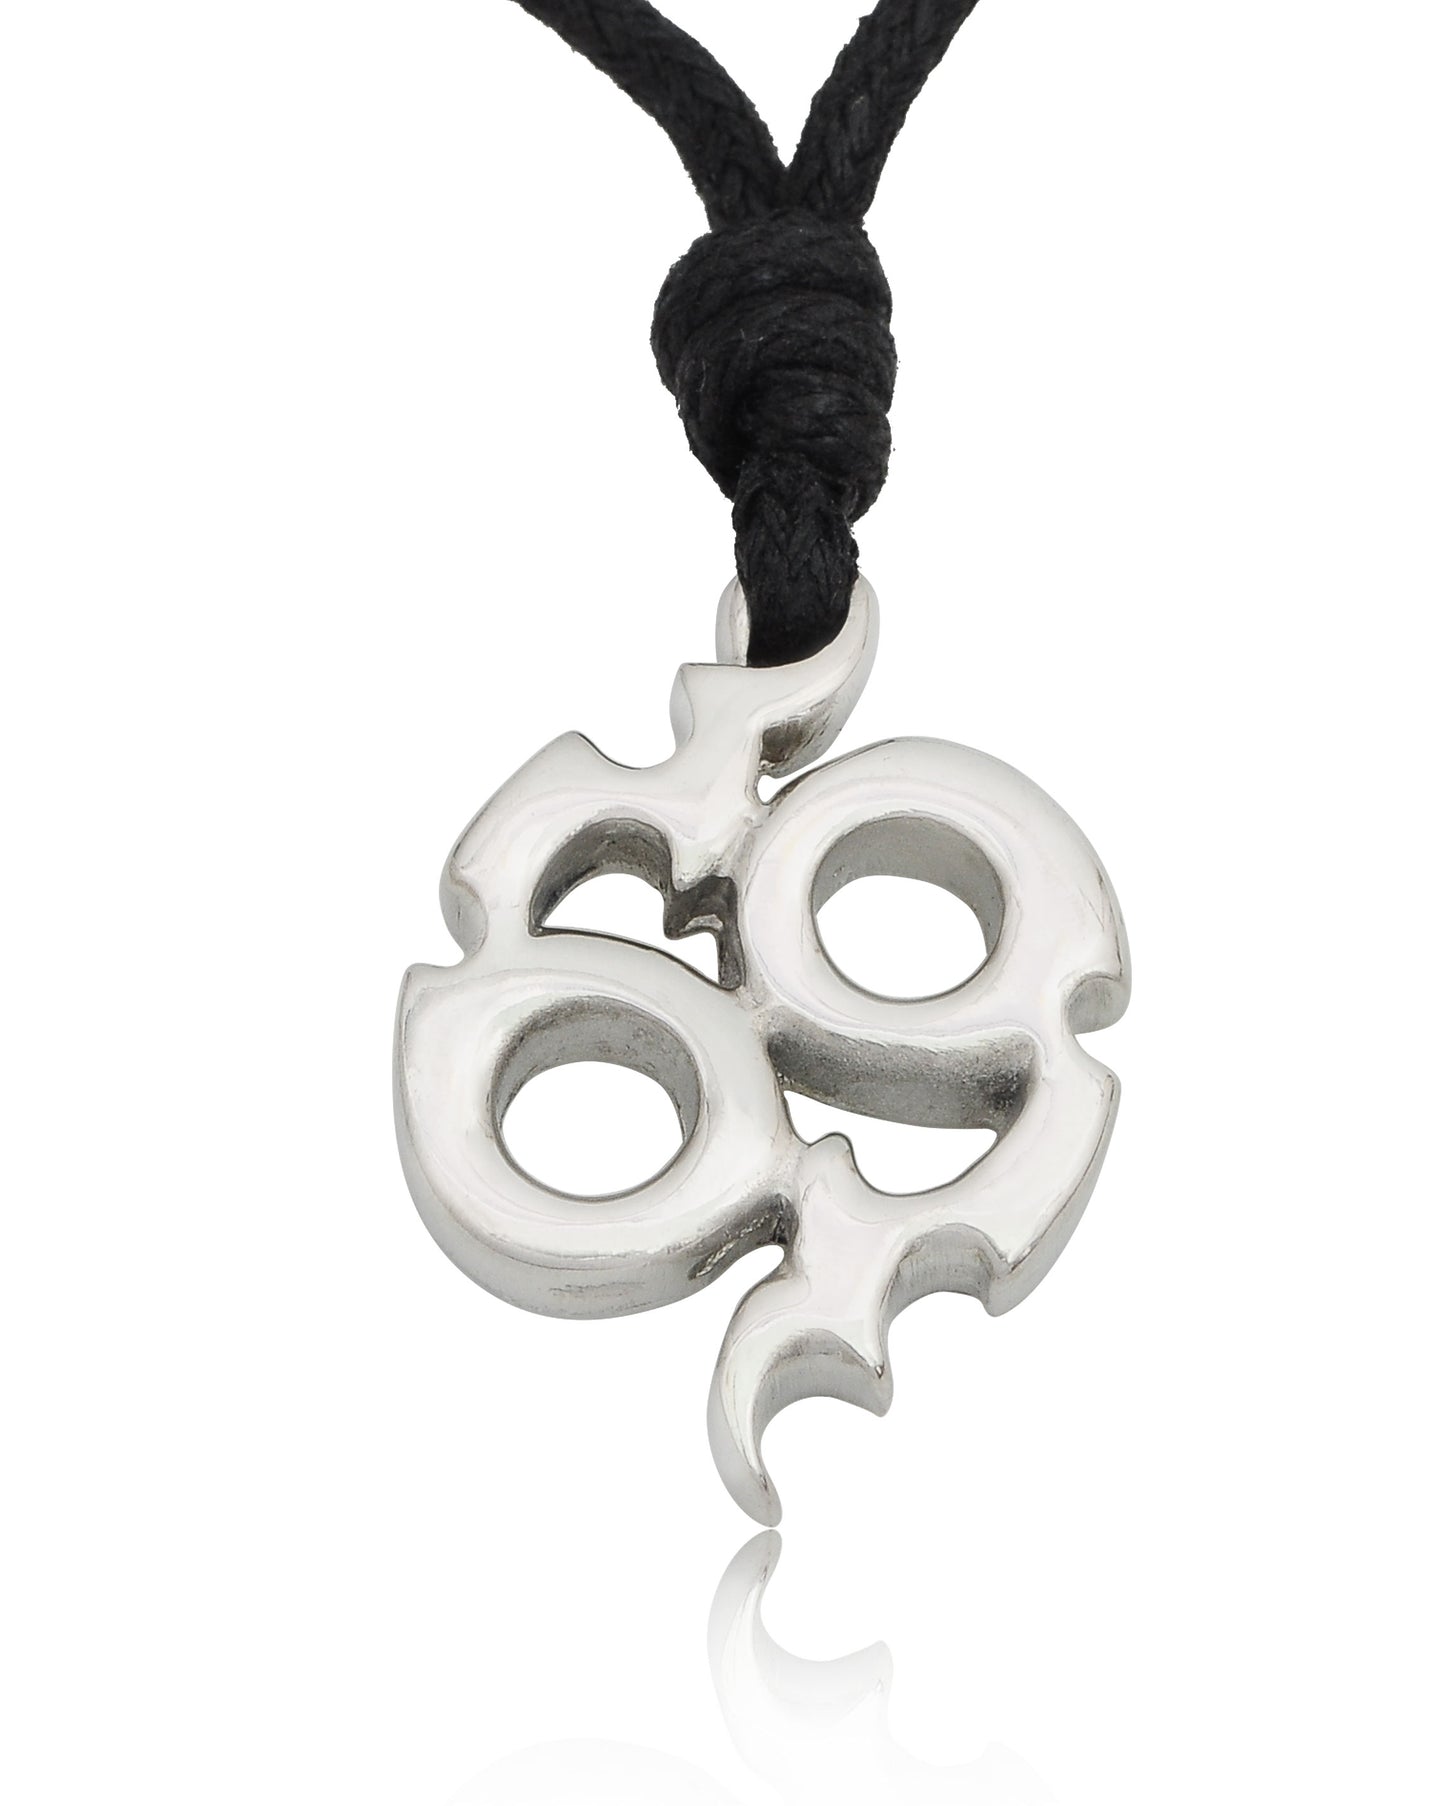 Maori Tribal Fishing Hook Tribal Silver Pewter Brass Necklace Pendant Jewelry